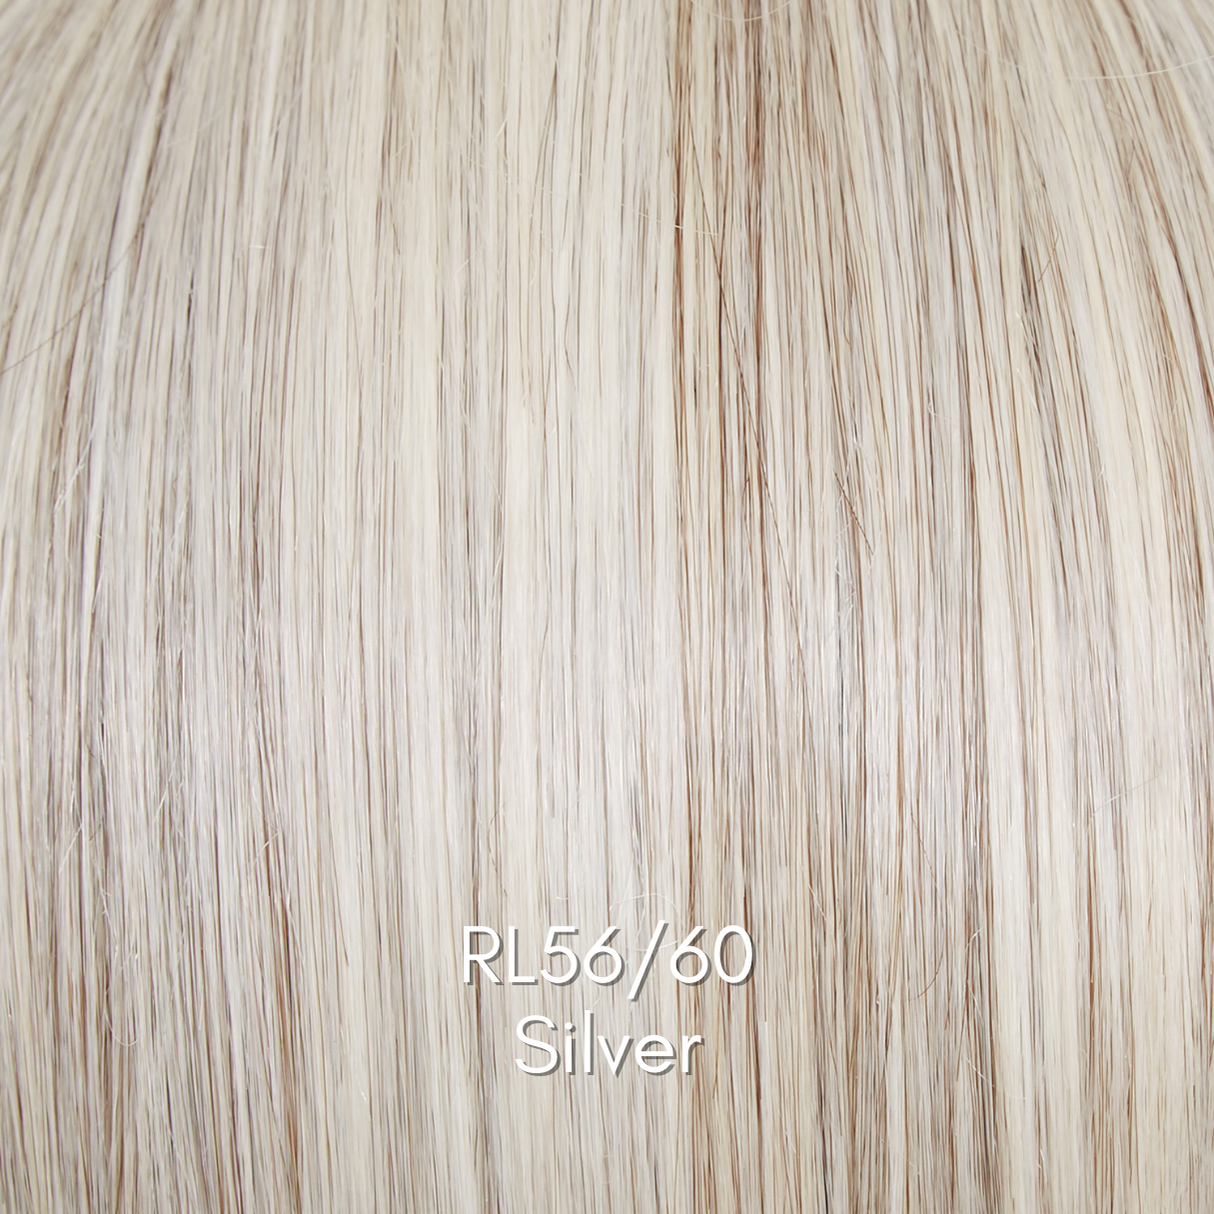 Flirt Alert - Signature Wig Collection by Raquel Welch